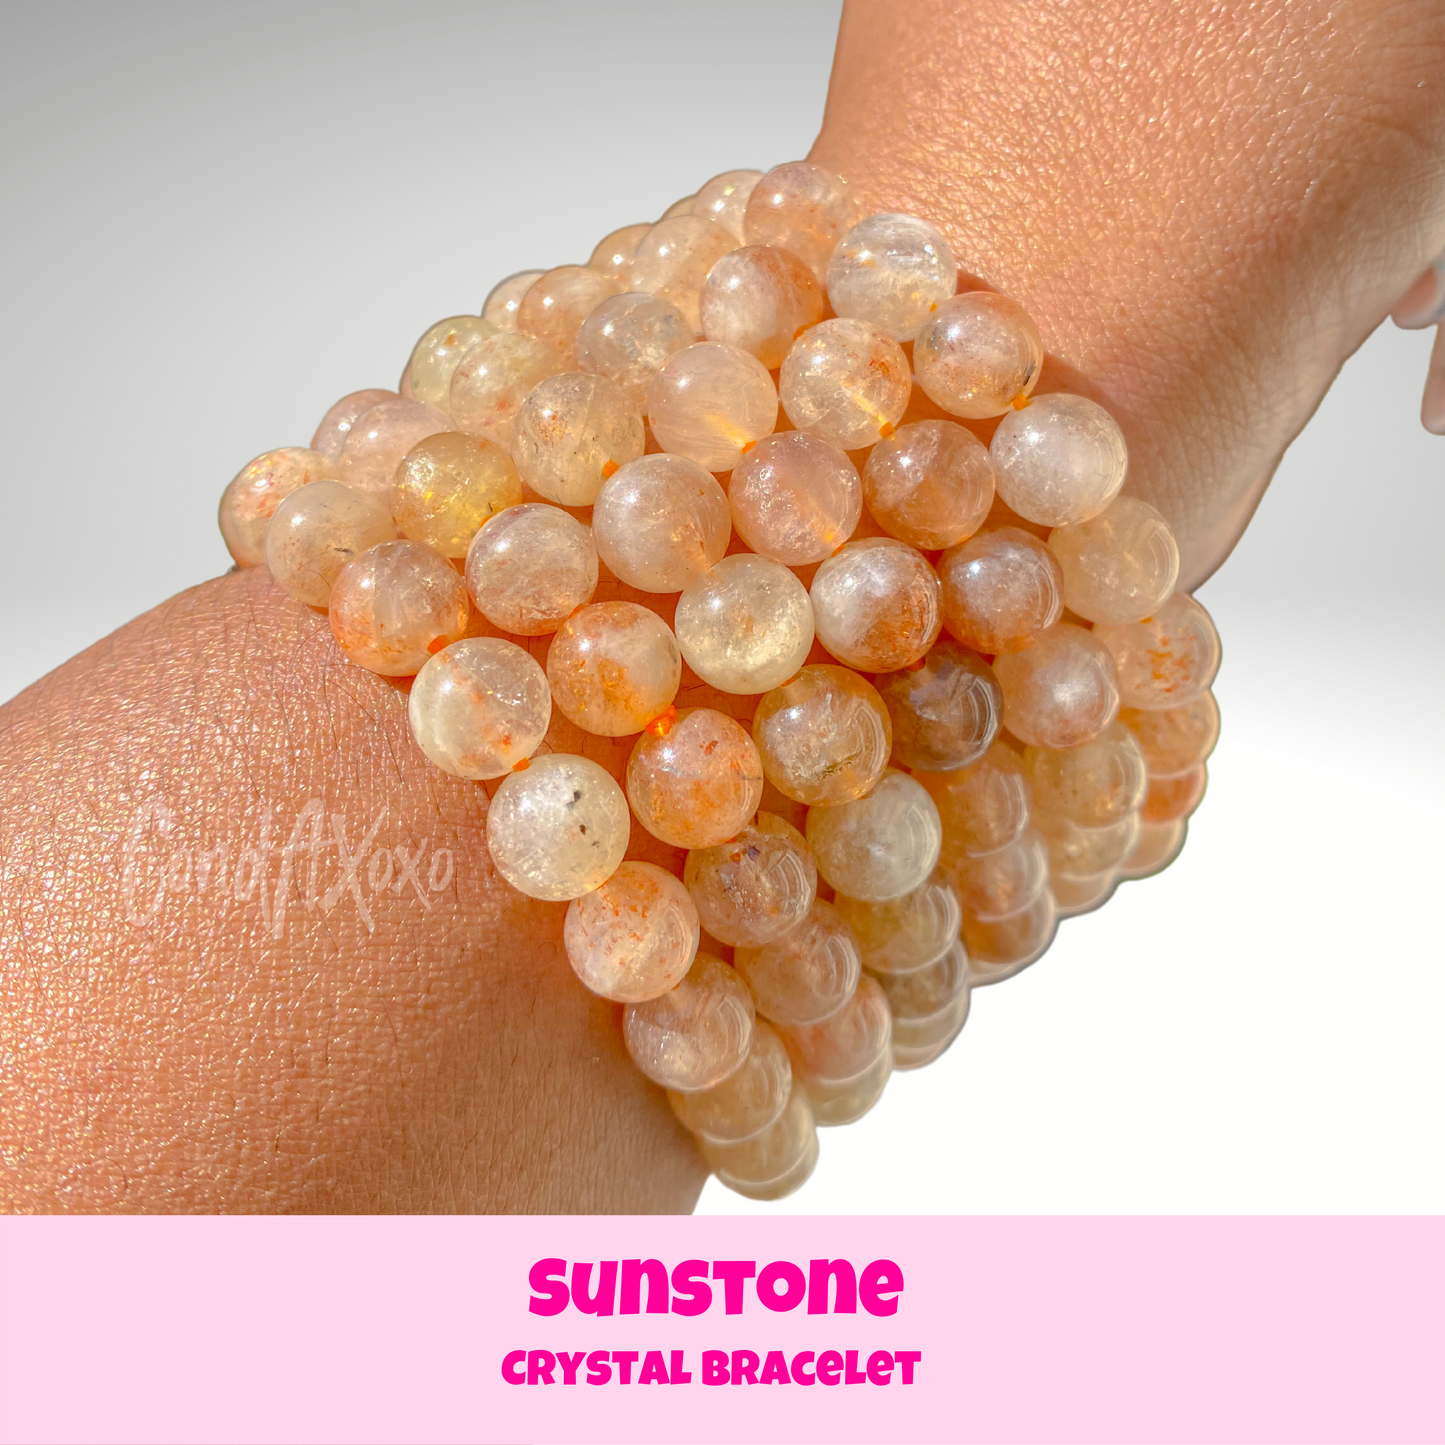 Sunstone Crystal Bracelet